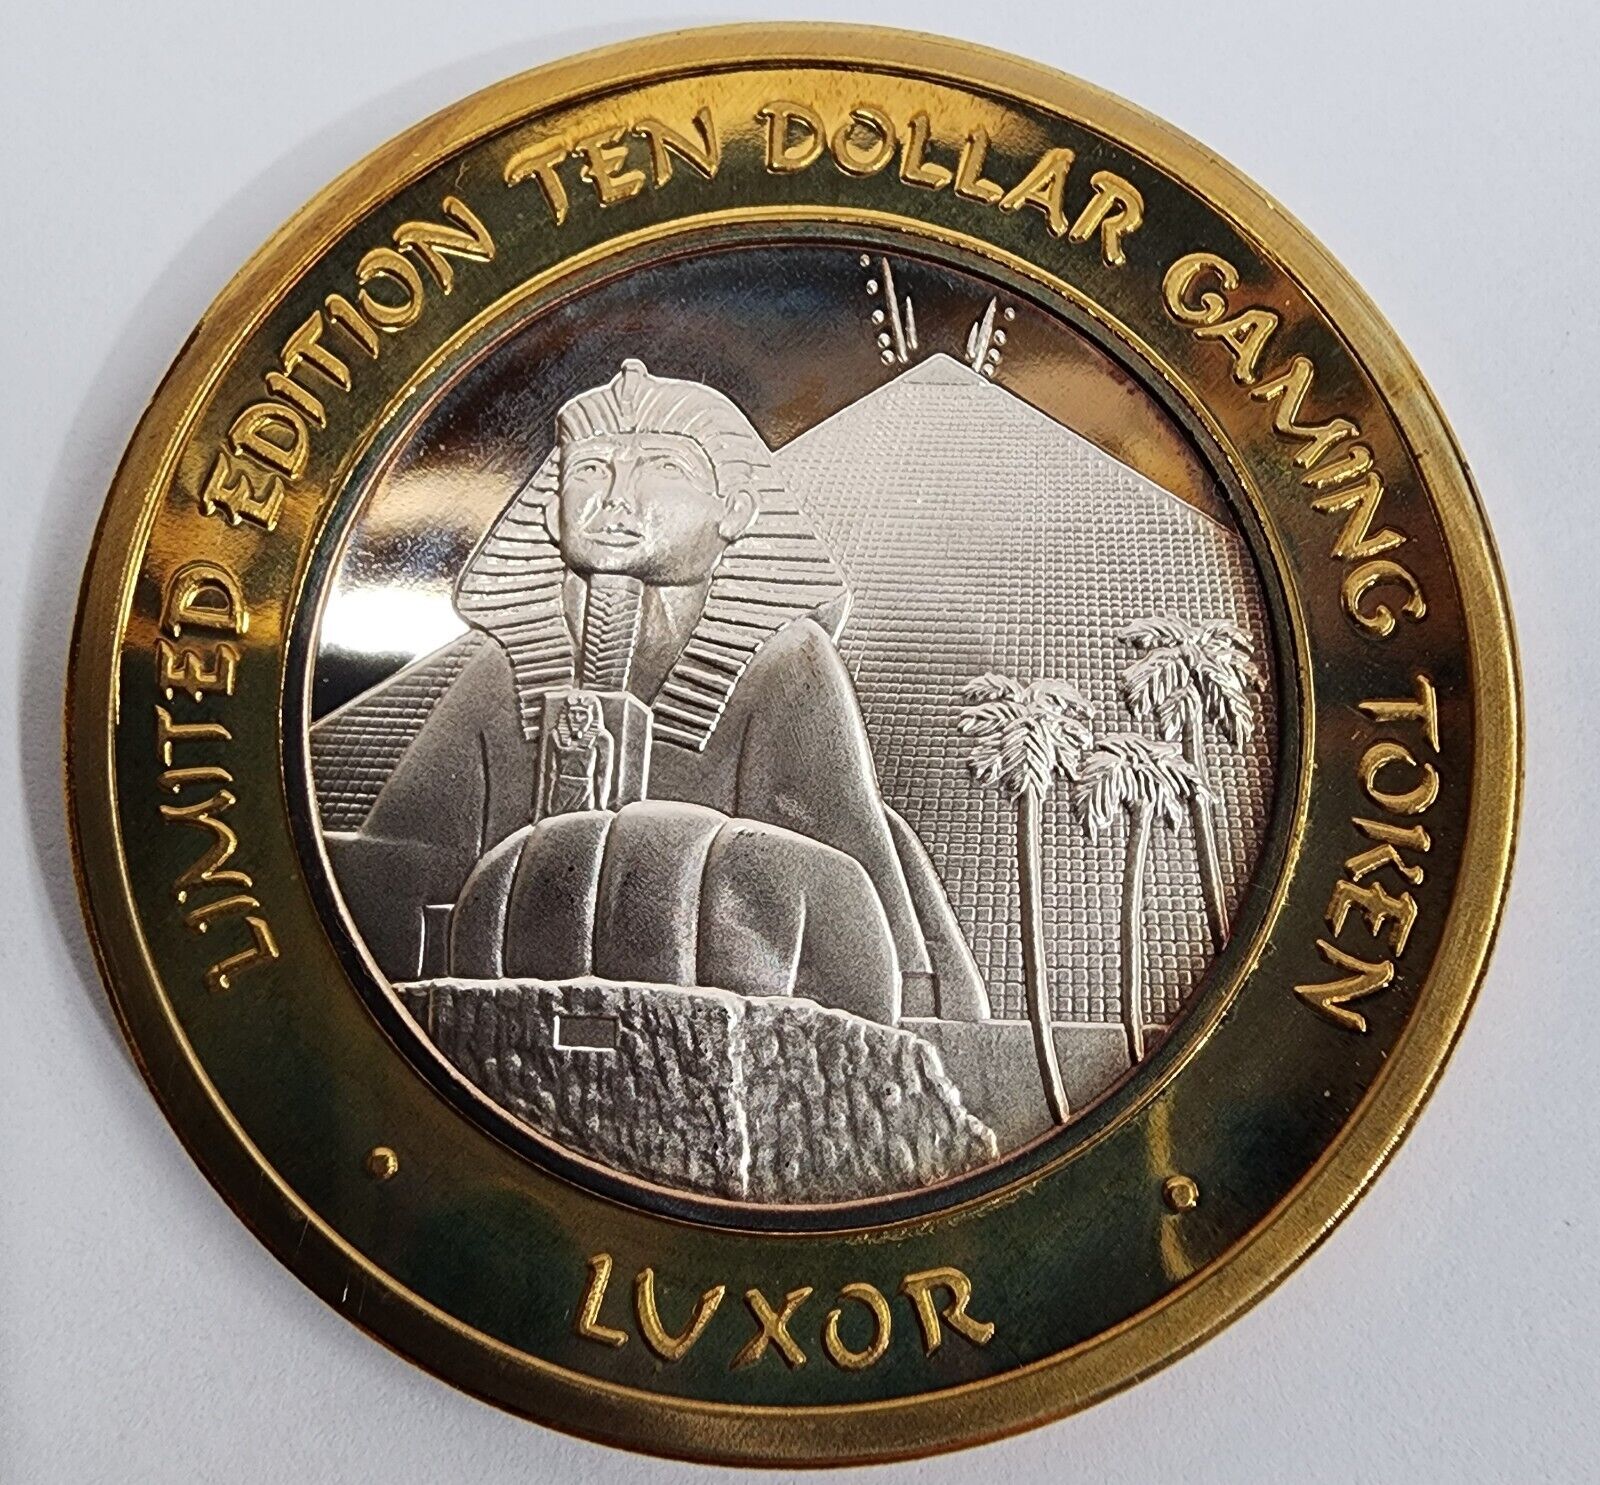 Luxor Las Vegas $10 999 Fine Silver Limited Edition Gaming Casino Token